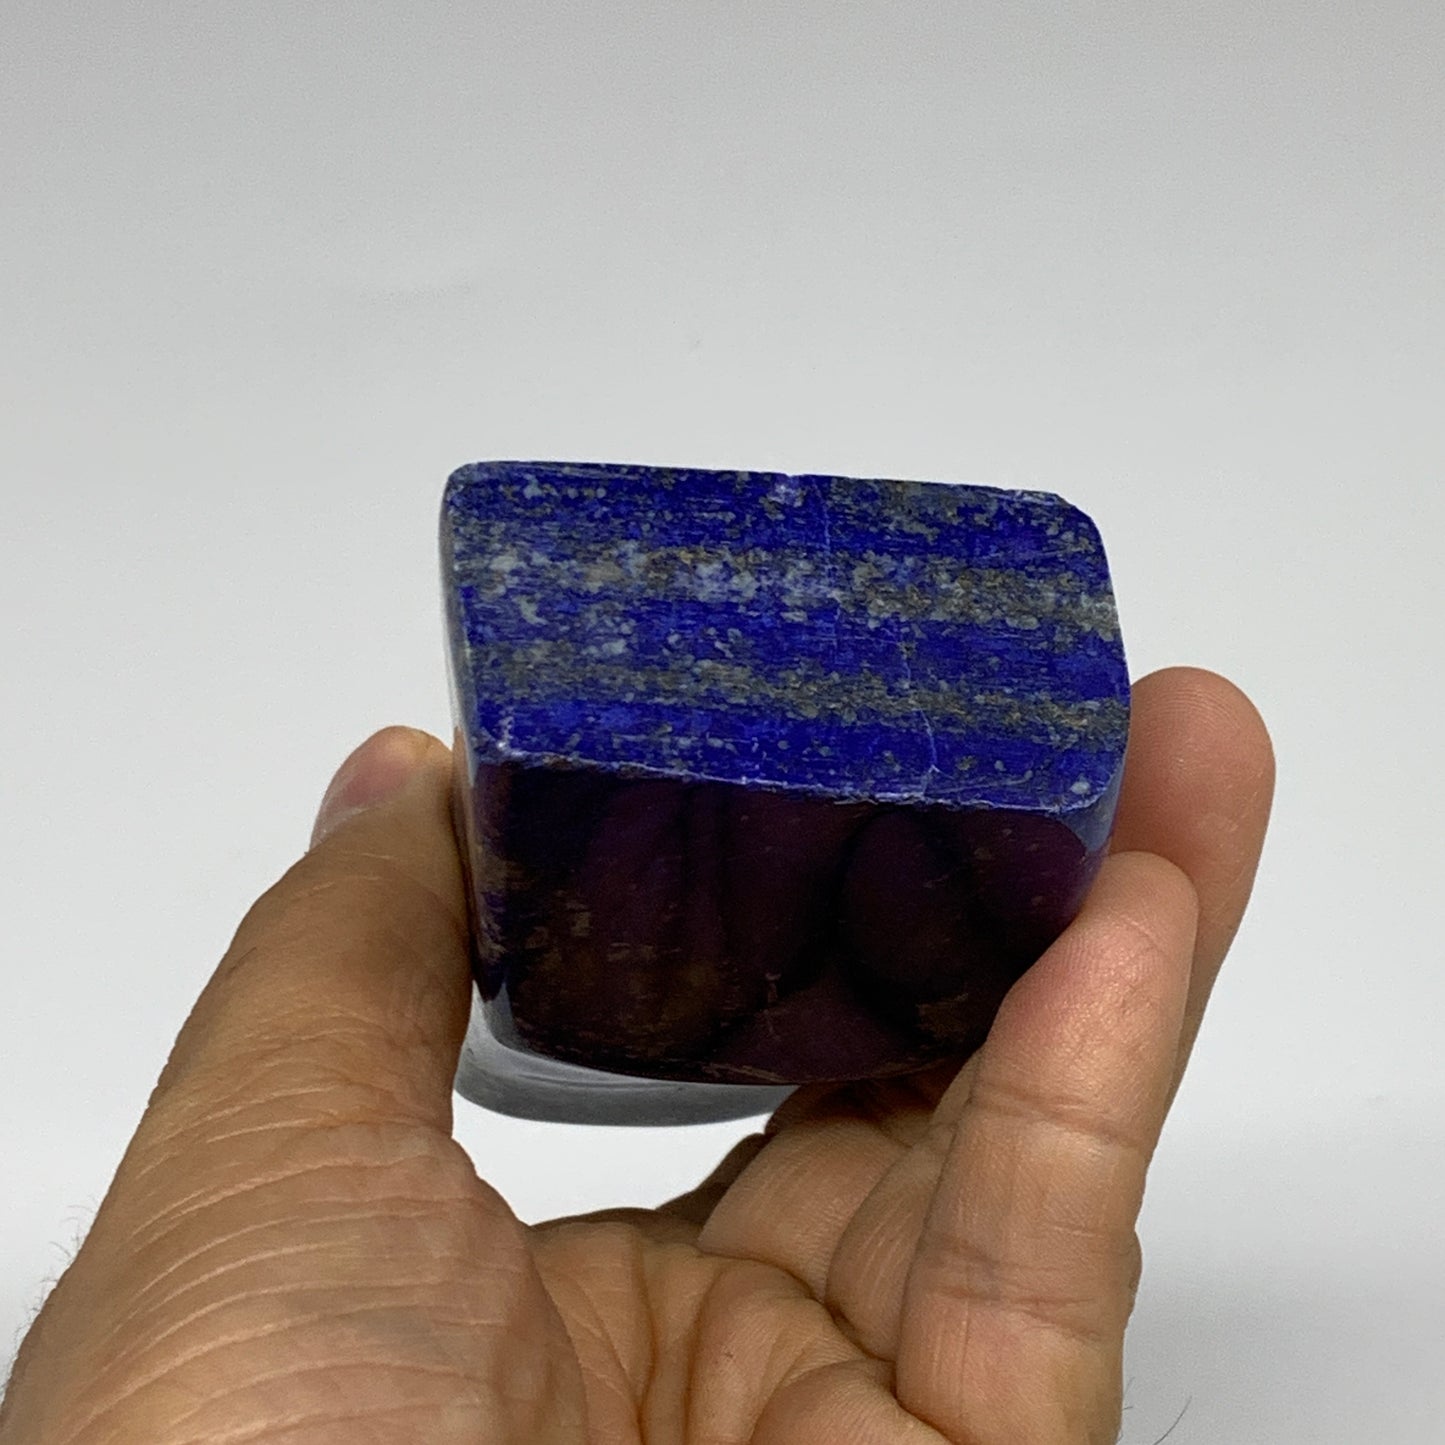 0.59 lbs, 4.1"x1.8"x1", Natural Freeform Lapis Lazuli from Afghanistan, B33394